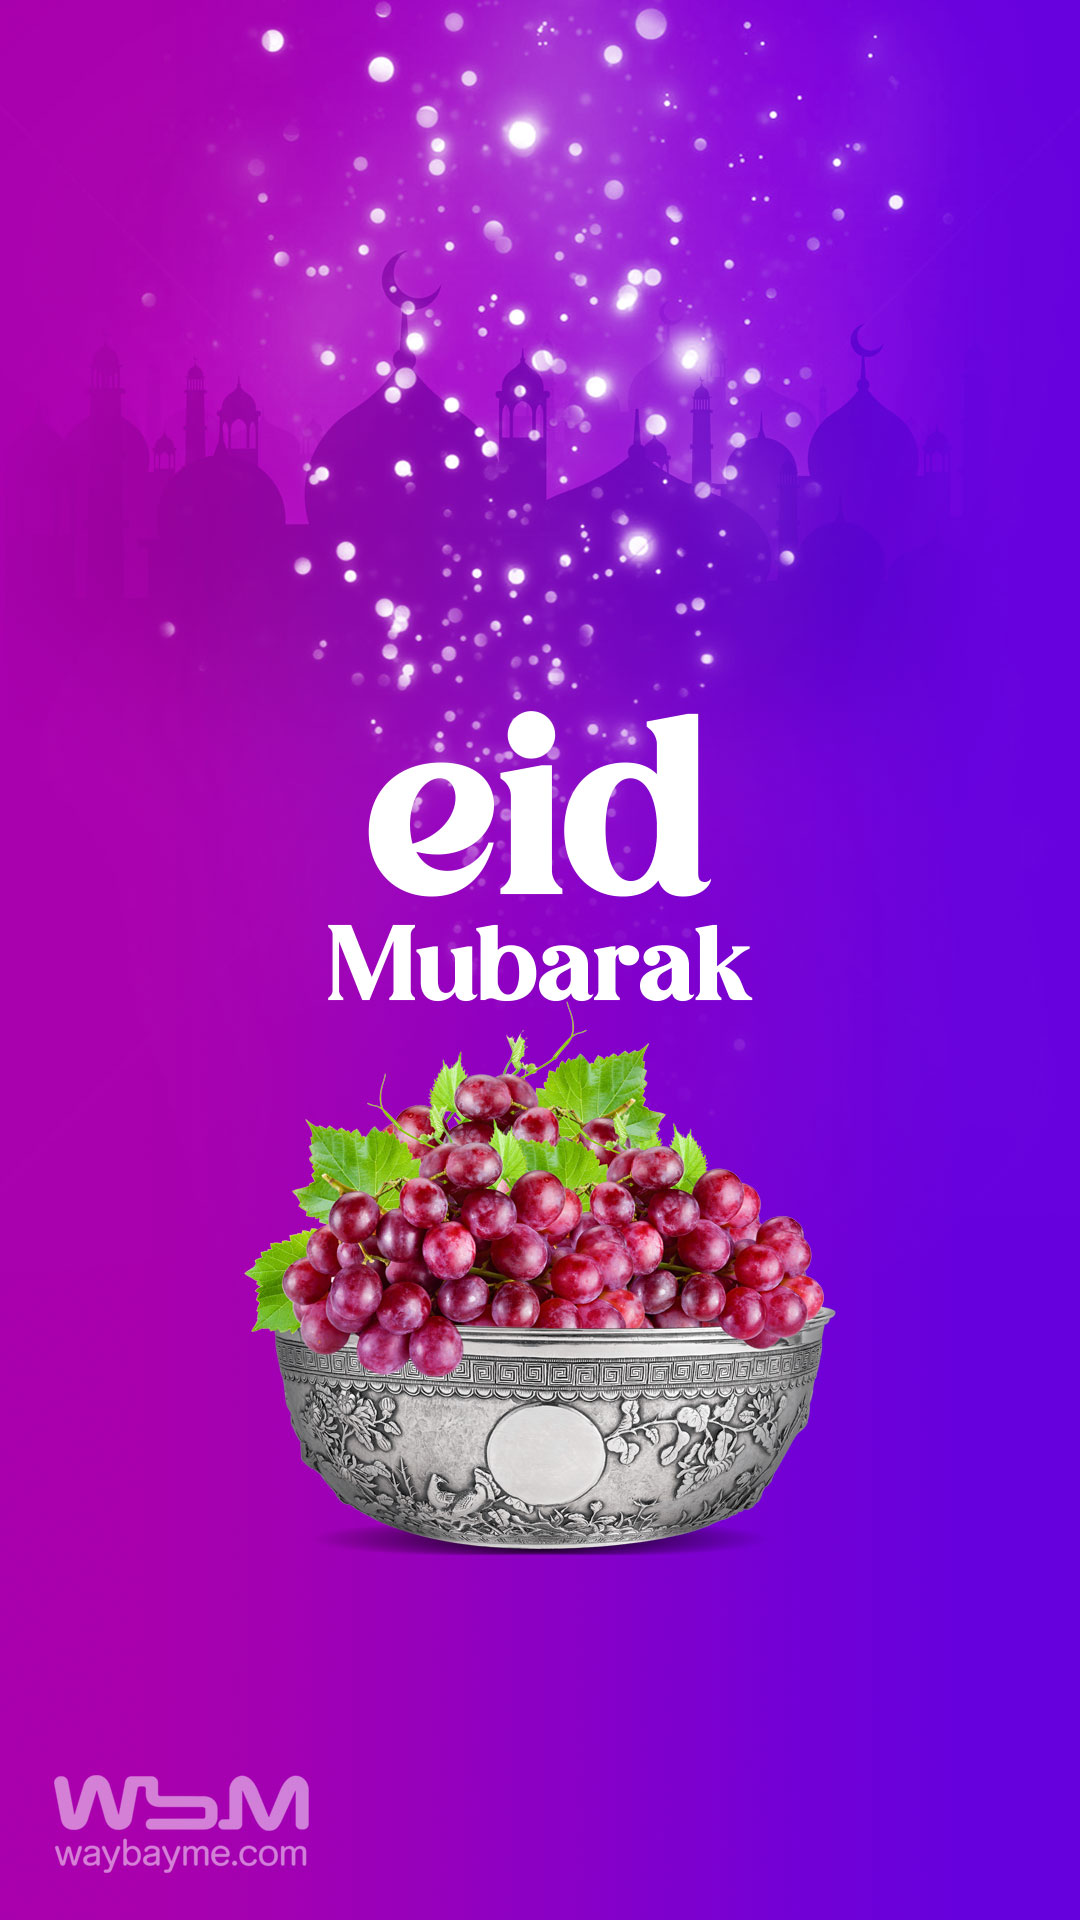 Eid Mubarak Greeting Cards, Eid Meaning, Eid Mubarak, Eid Mubarak Wishes, Eid Mubarak Greetings, Eid Mubarak Images, Eid Mubarak Images HD, Eid Mubarak Photo Gallery, Eid Mubarak Wallpaper, Eid Mubarak Video, Eid Mubarak Cards, Eid Mubarak Background, Eid Mubarak Message, Eid Mubarak Design, Eid Mubarak Whatsapp Video, Eid Al Adha, Eid Al Fitr